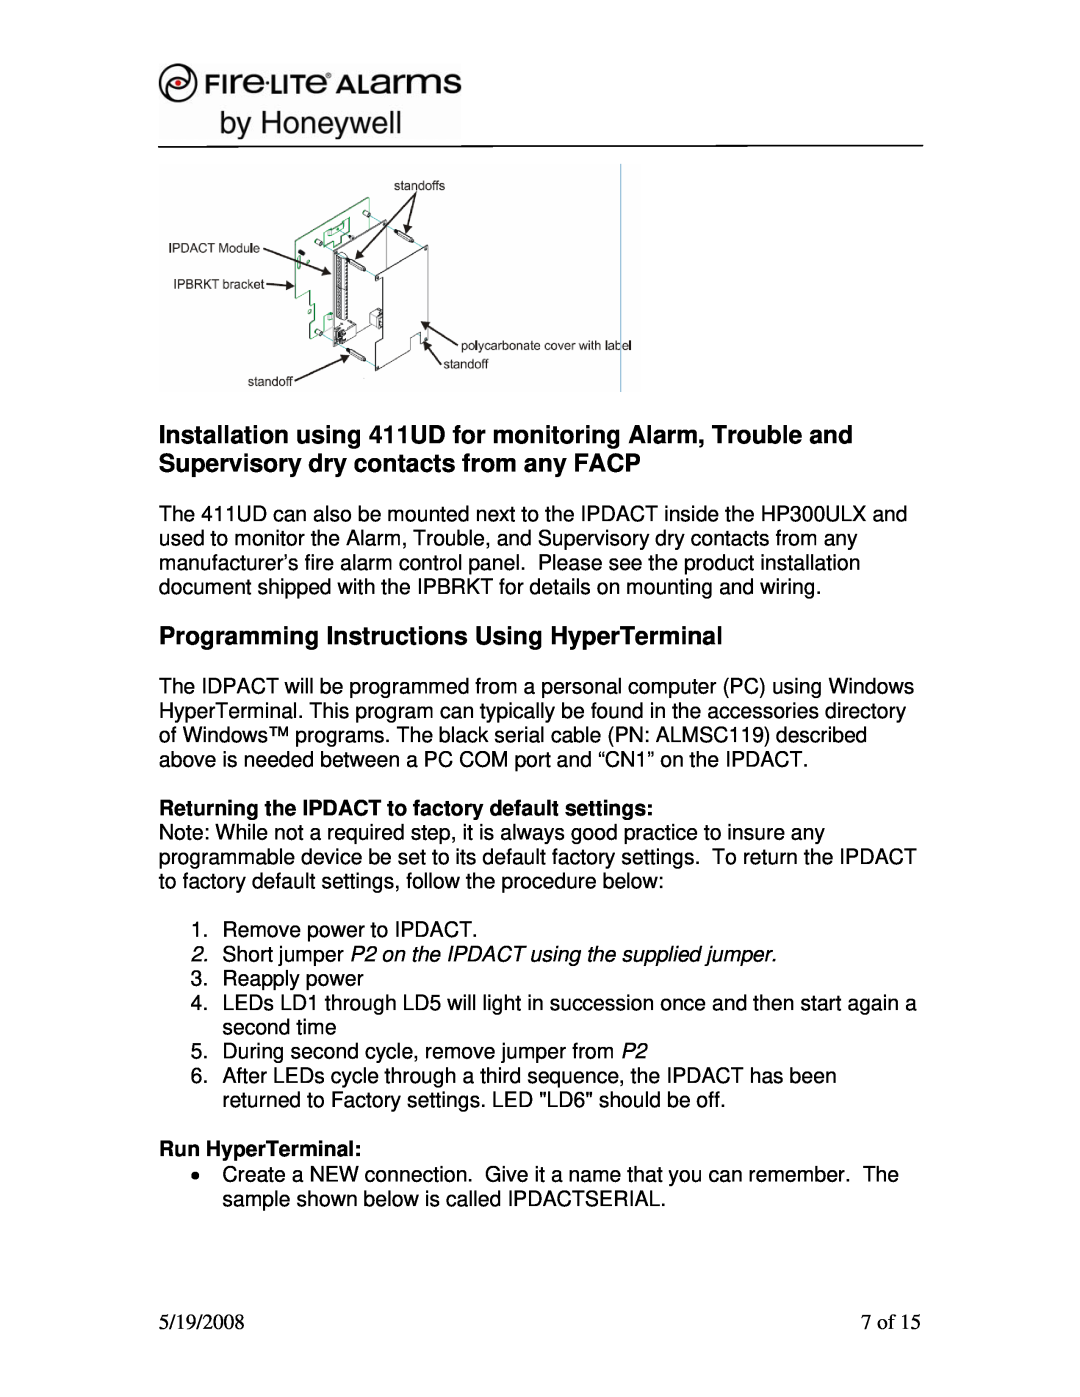 Honeywell Smoke Alarm Programming Instructions Using HyperTerminal, Returning the IPDACT to factory default settings 